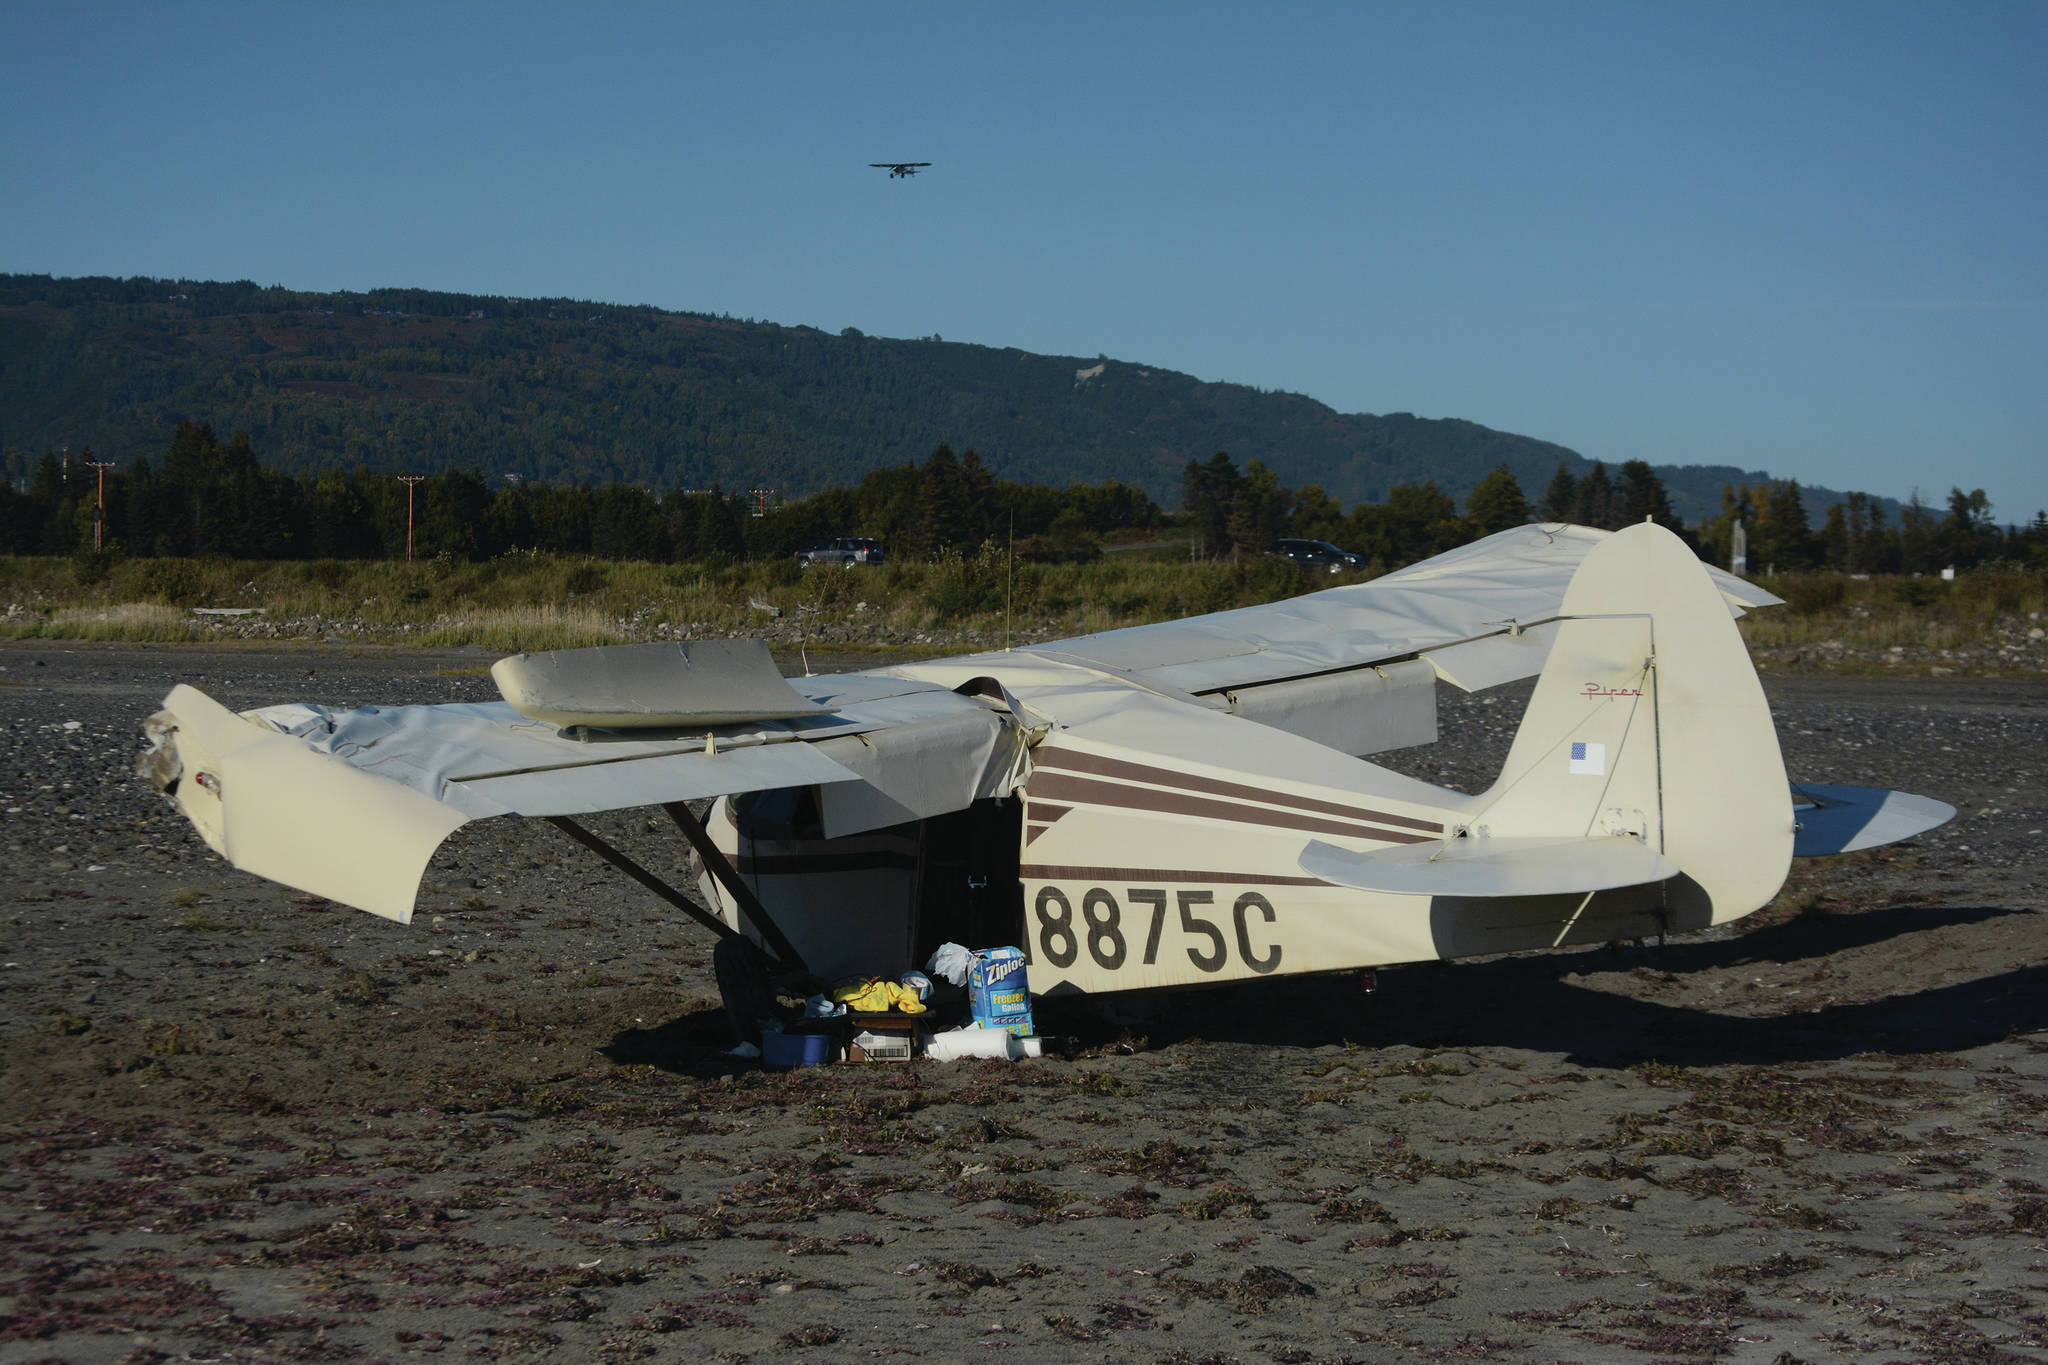 Pilot suffers minor injuries in Sunday plane crash